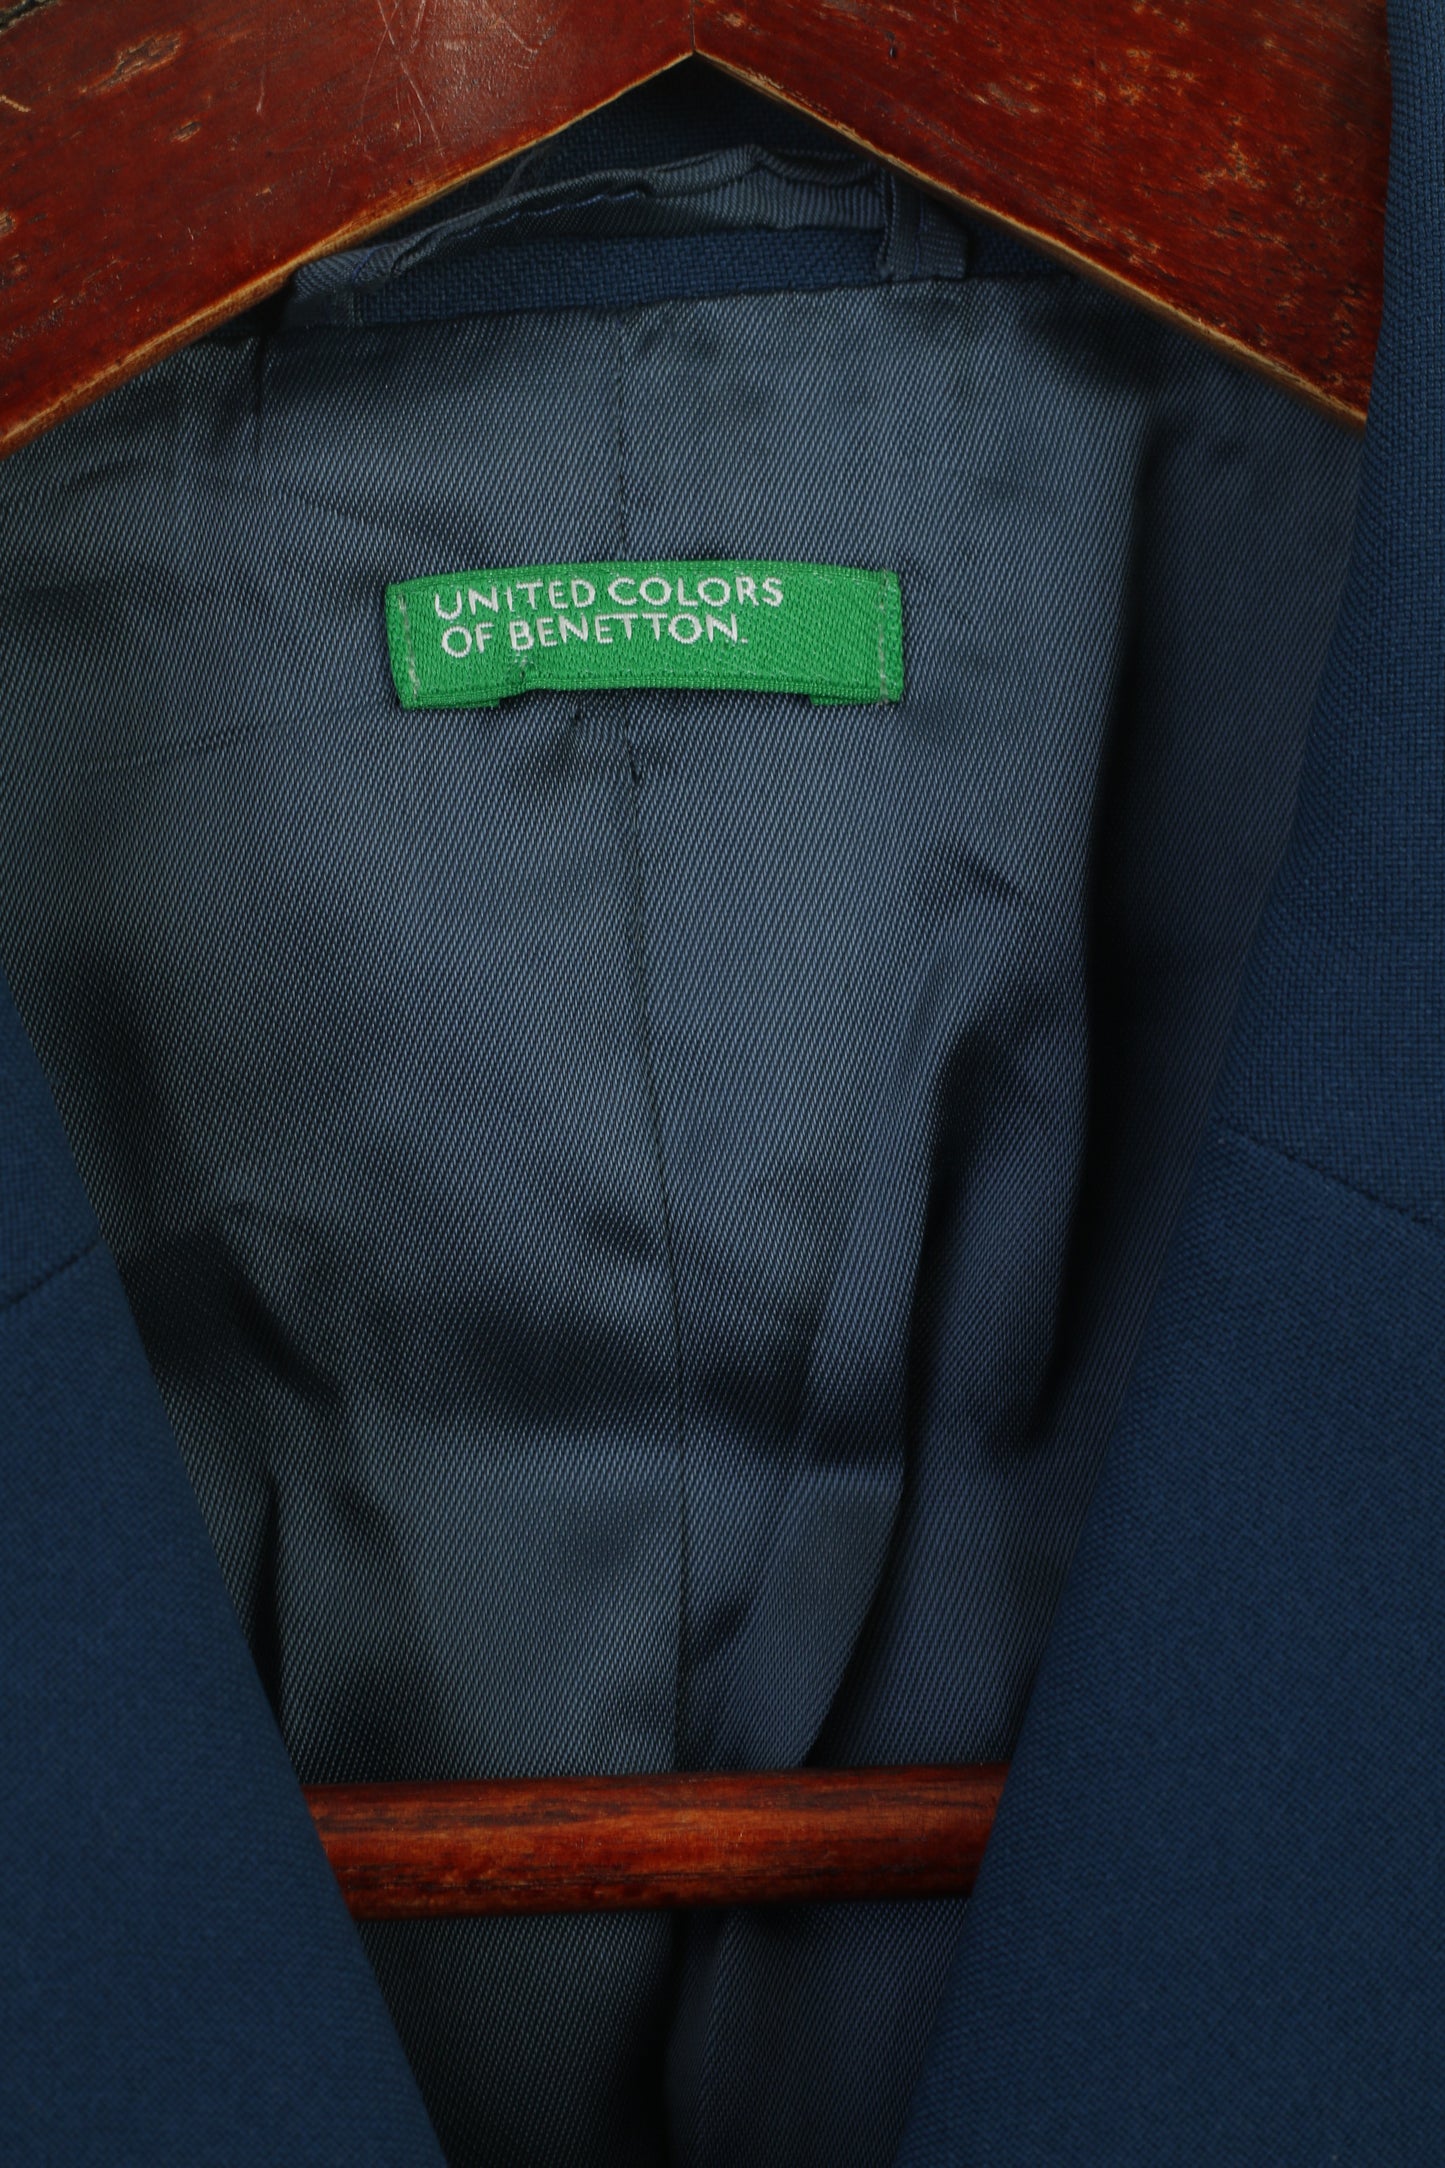 United Colors of Benetton Donna 46 M Blazer Sea Green Vintage Top Suit